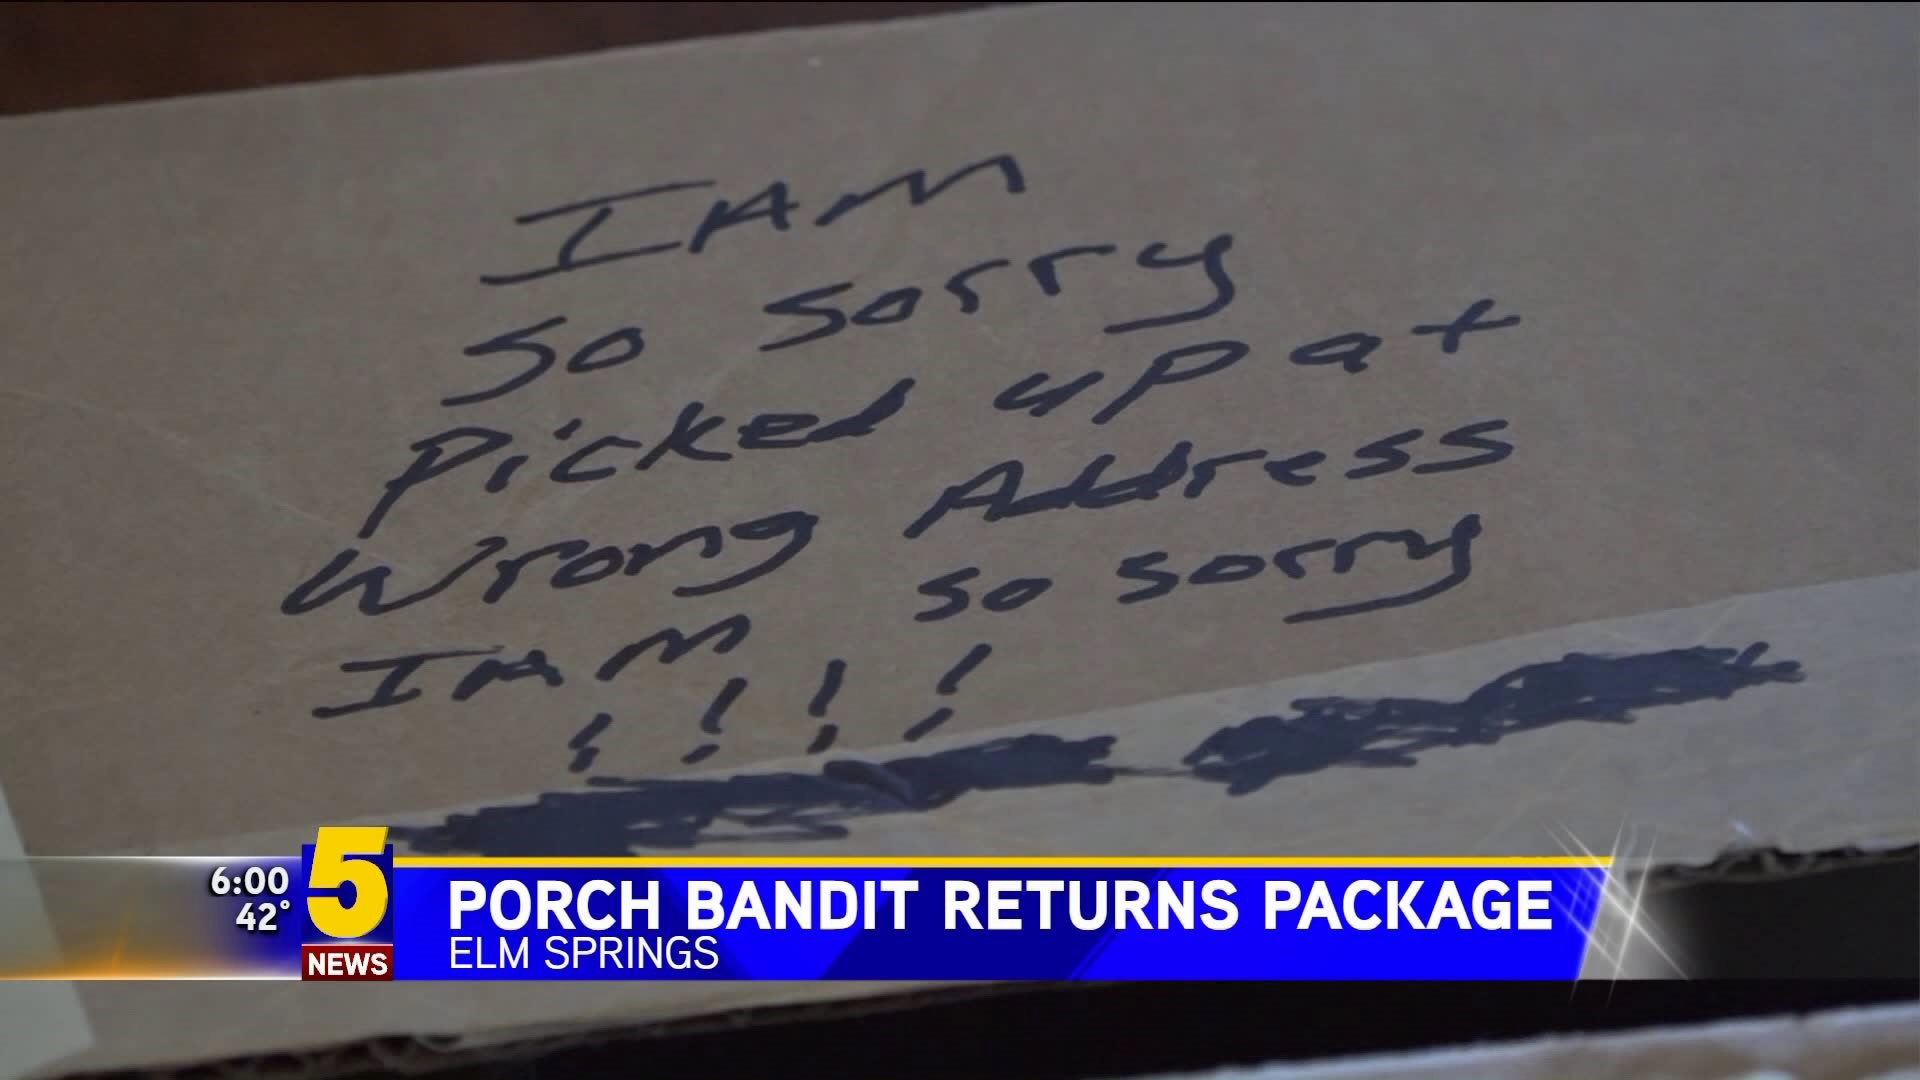 Porch Bandit Returns Package